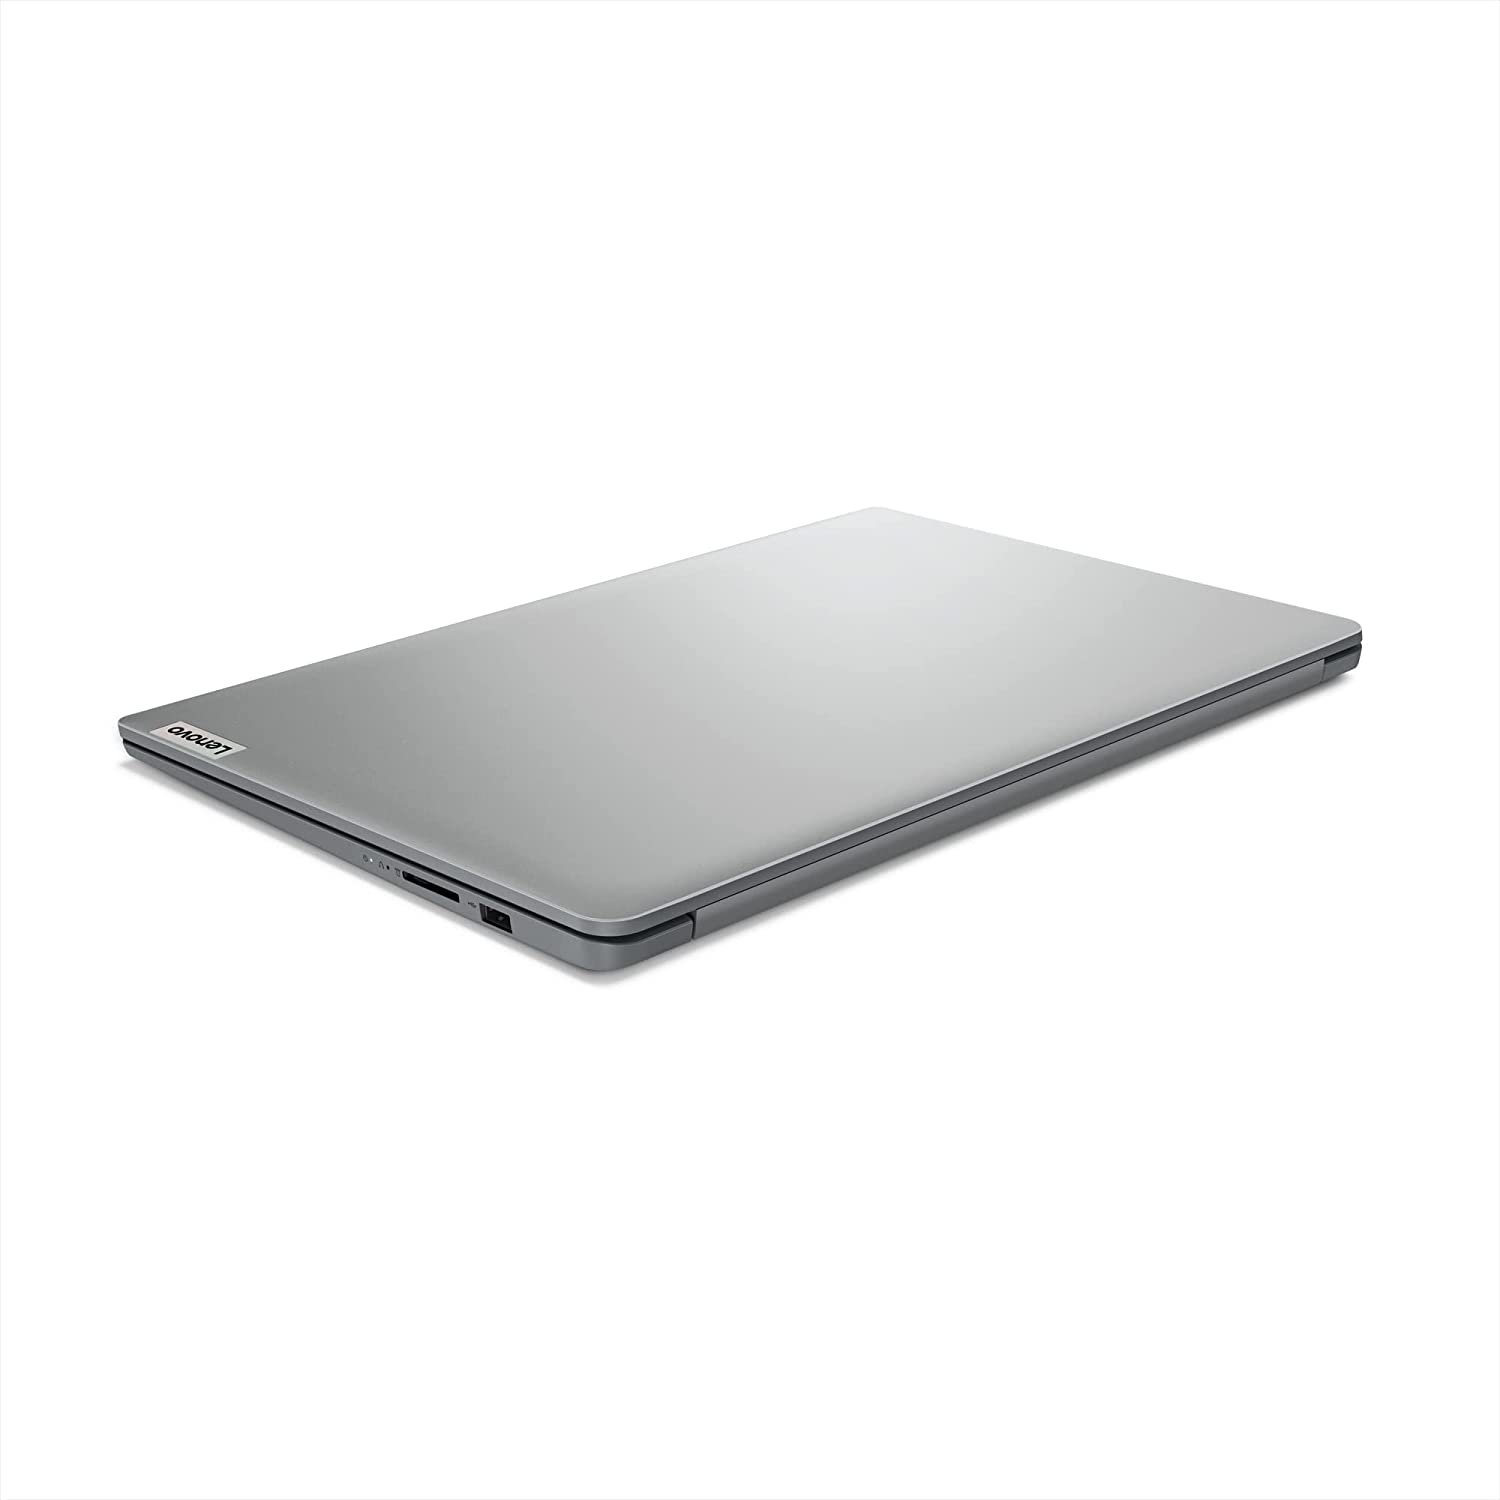 Lenovo IdeaPad 1 (82R1005HUK) Laptop AMD Ryzen 7-3700U 8GB RAM 512GB SSD 15.6" Grey